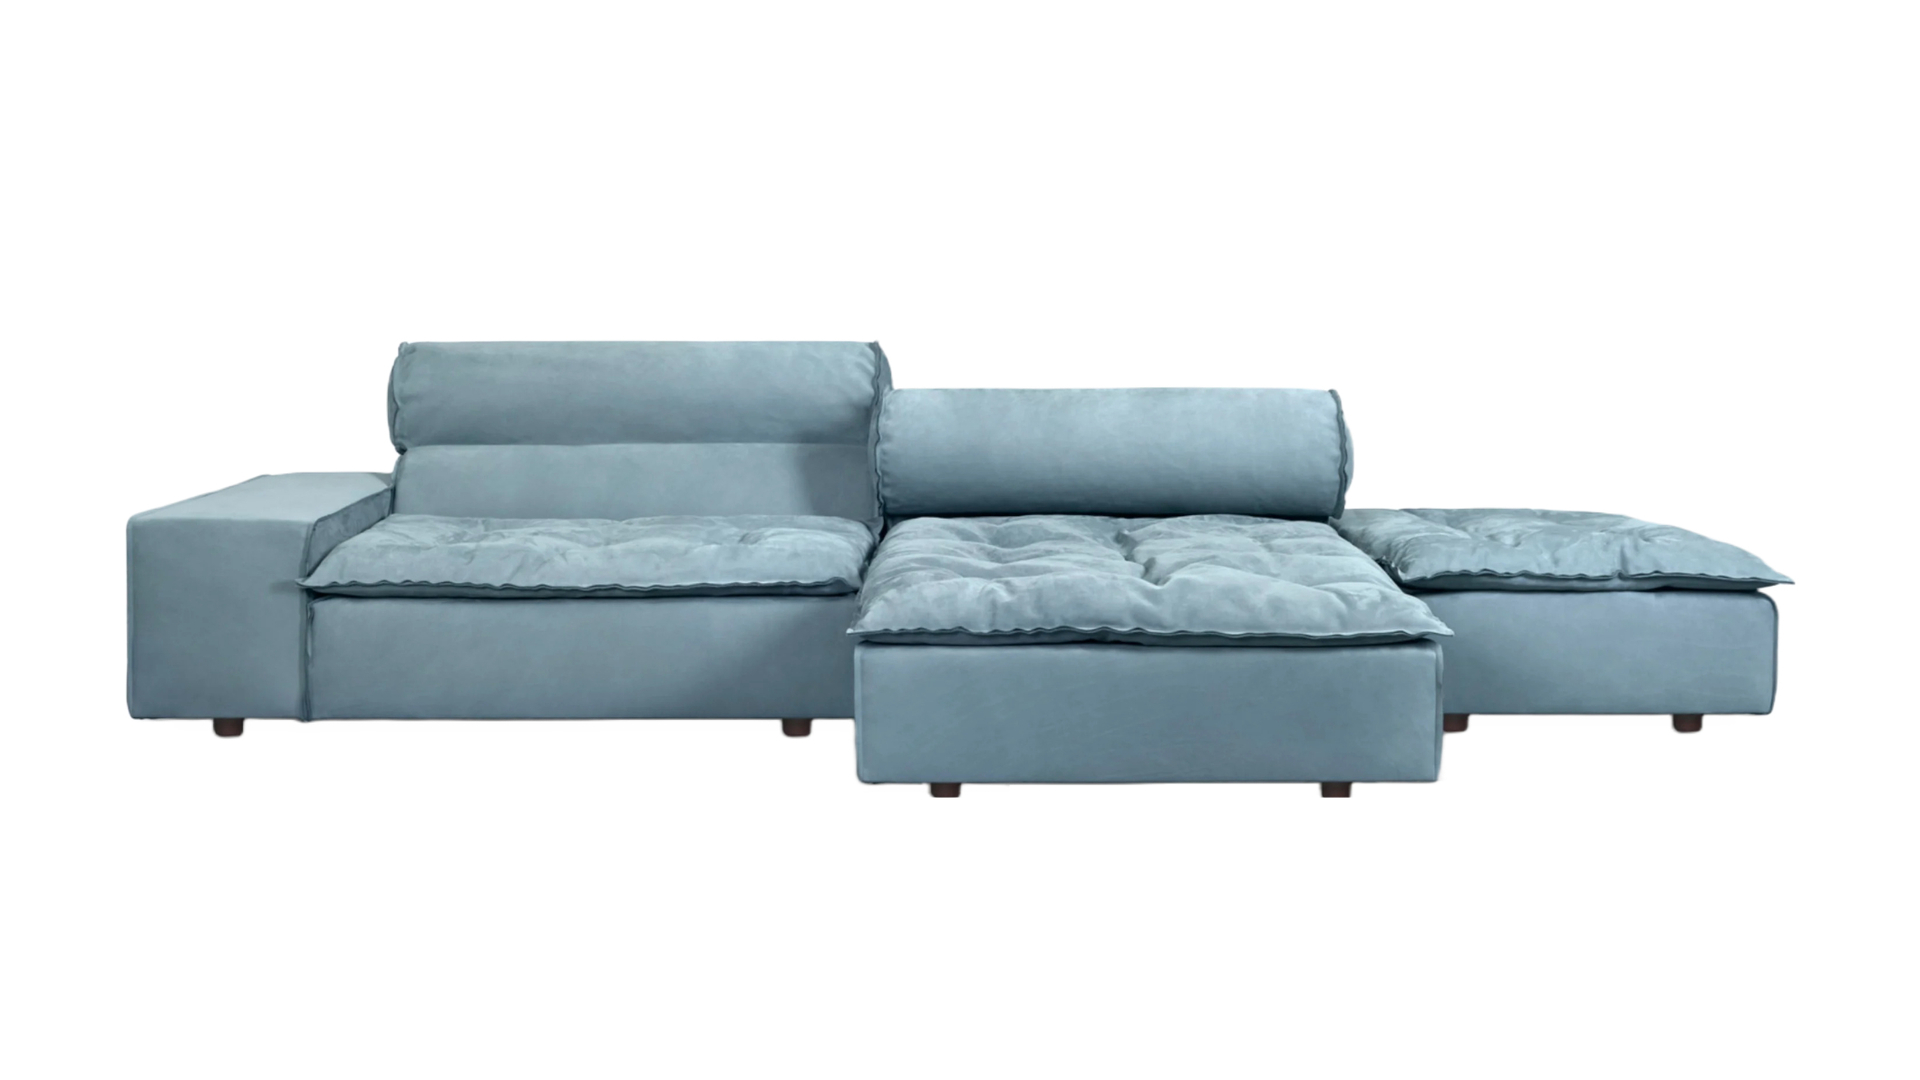 HORA Barneveld Miami Soft modulaire bank sofa bank met zachte kussens 8.jpg